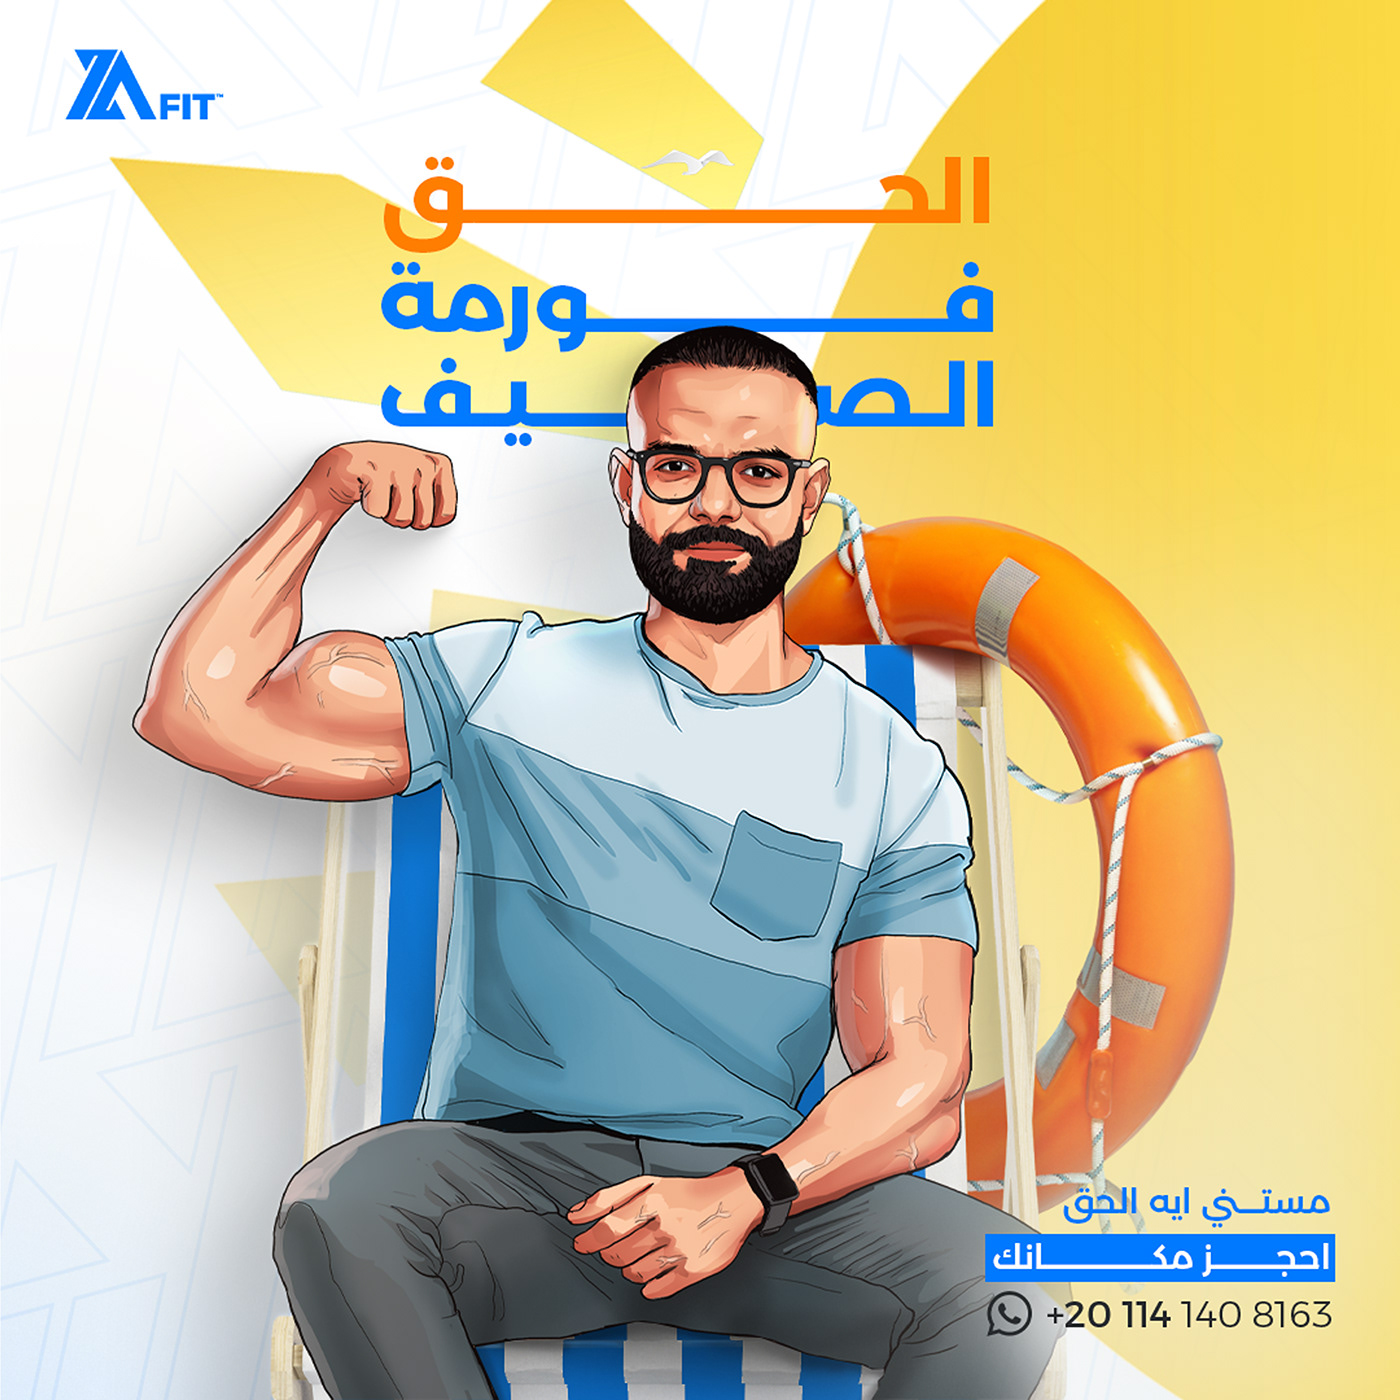 fitness illustrations campaign Advertising  rebranding ZaFit